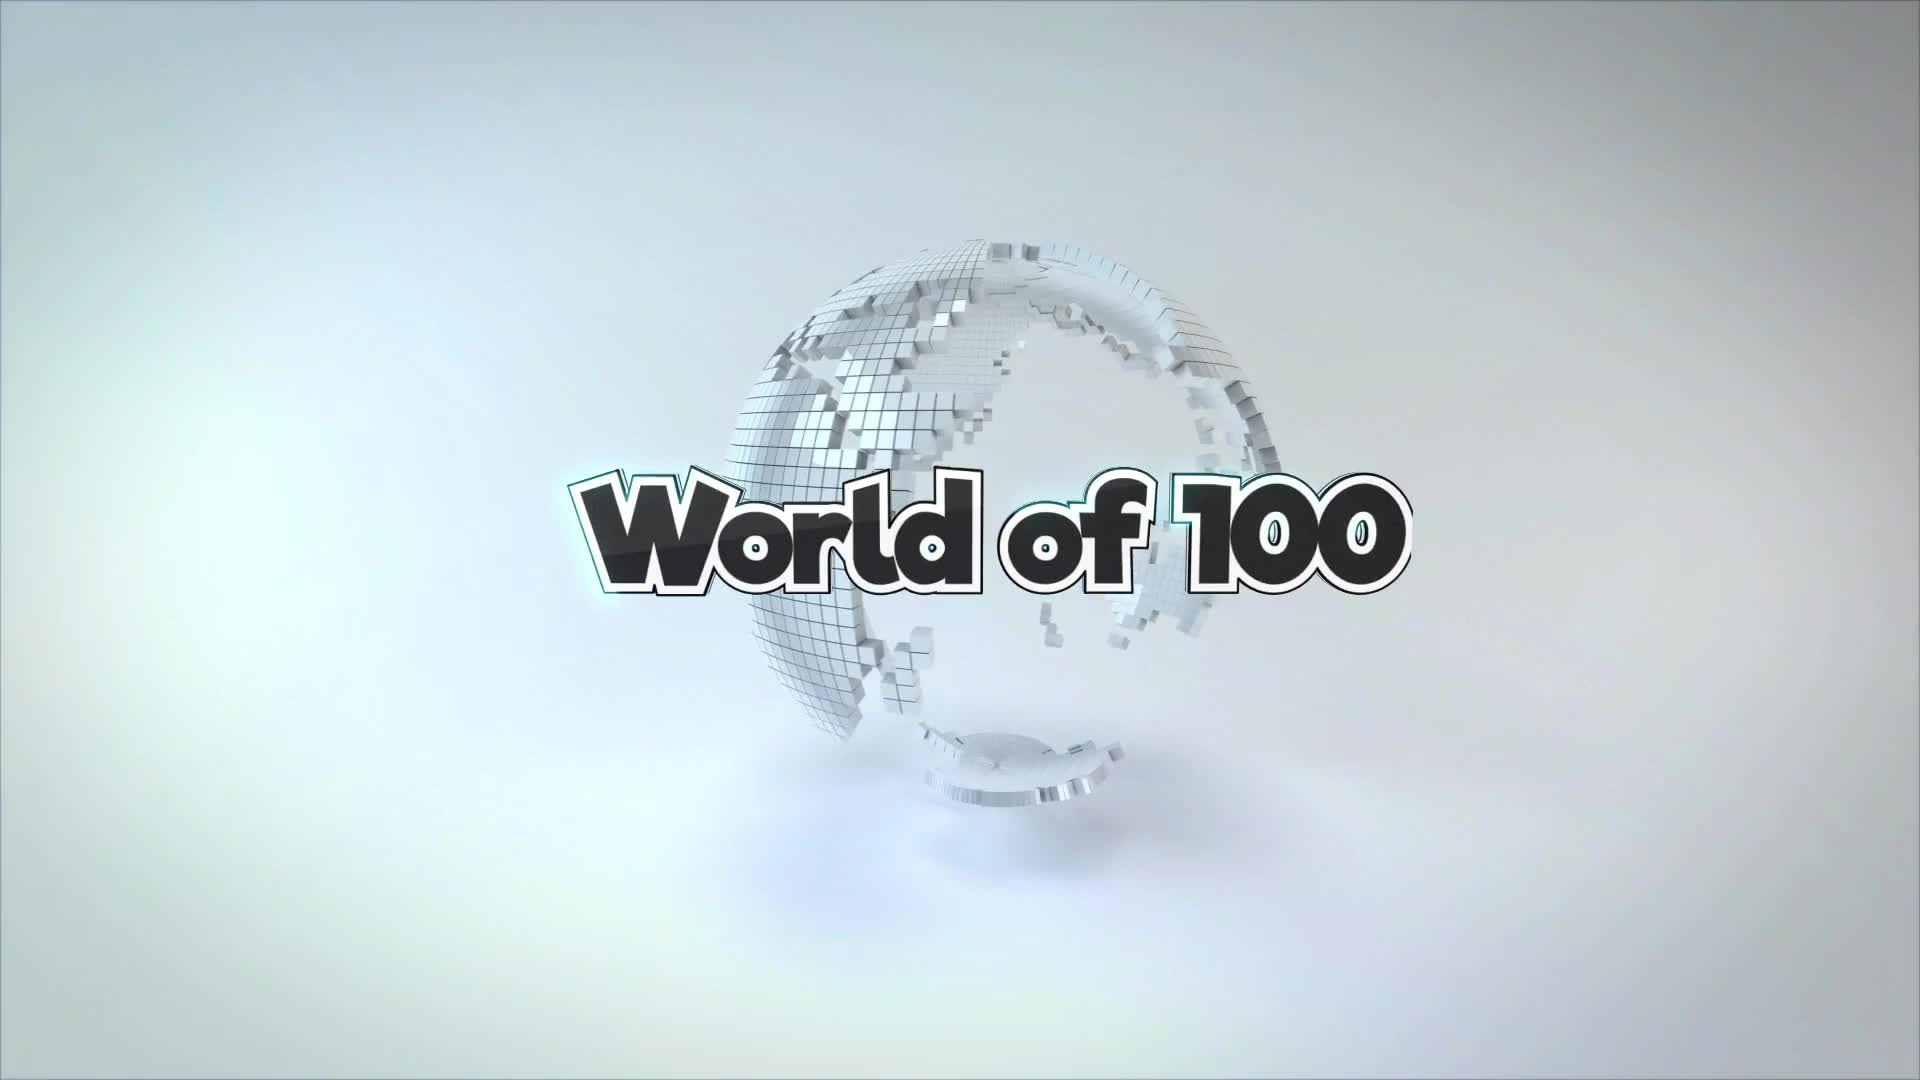 World of 100 (2019 Update)